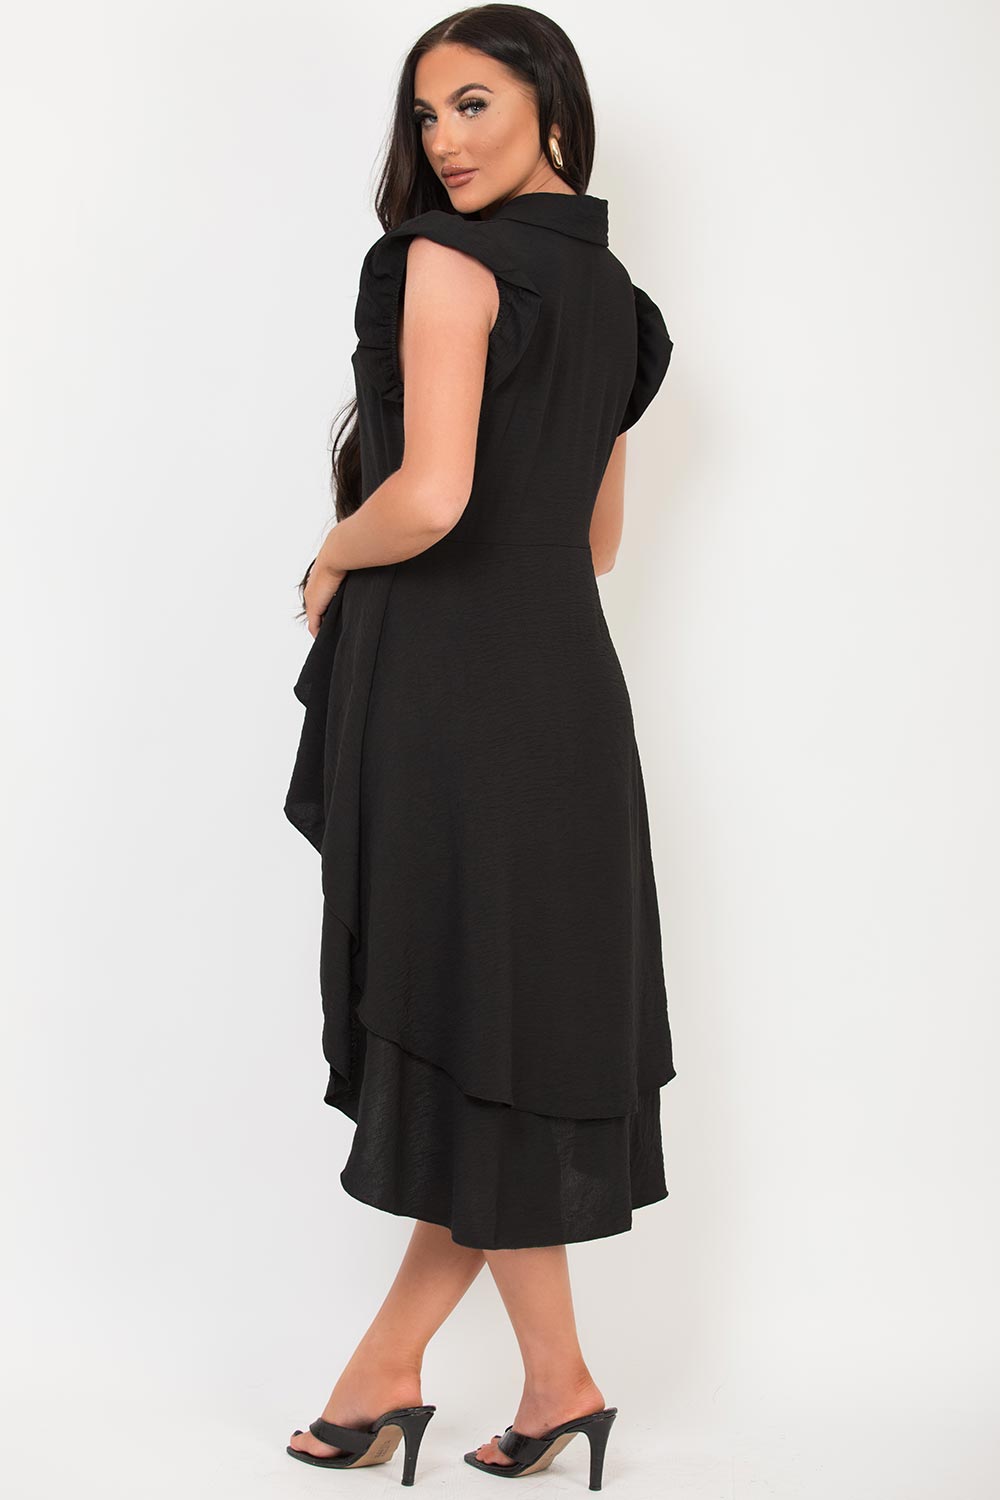 Black Long Sleeve Bodycon Dress With Diamante Detail –